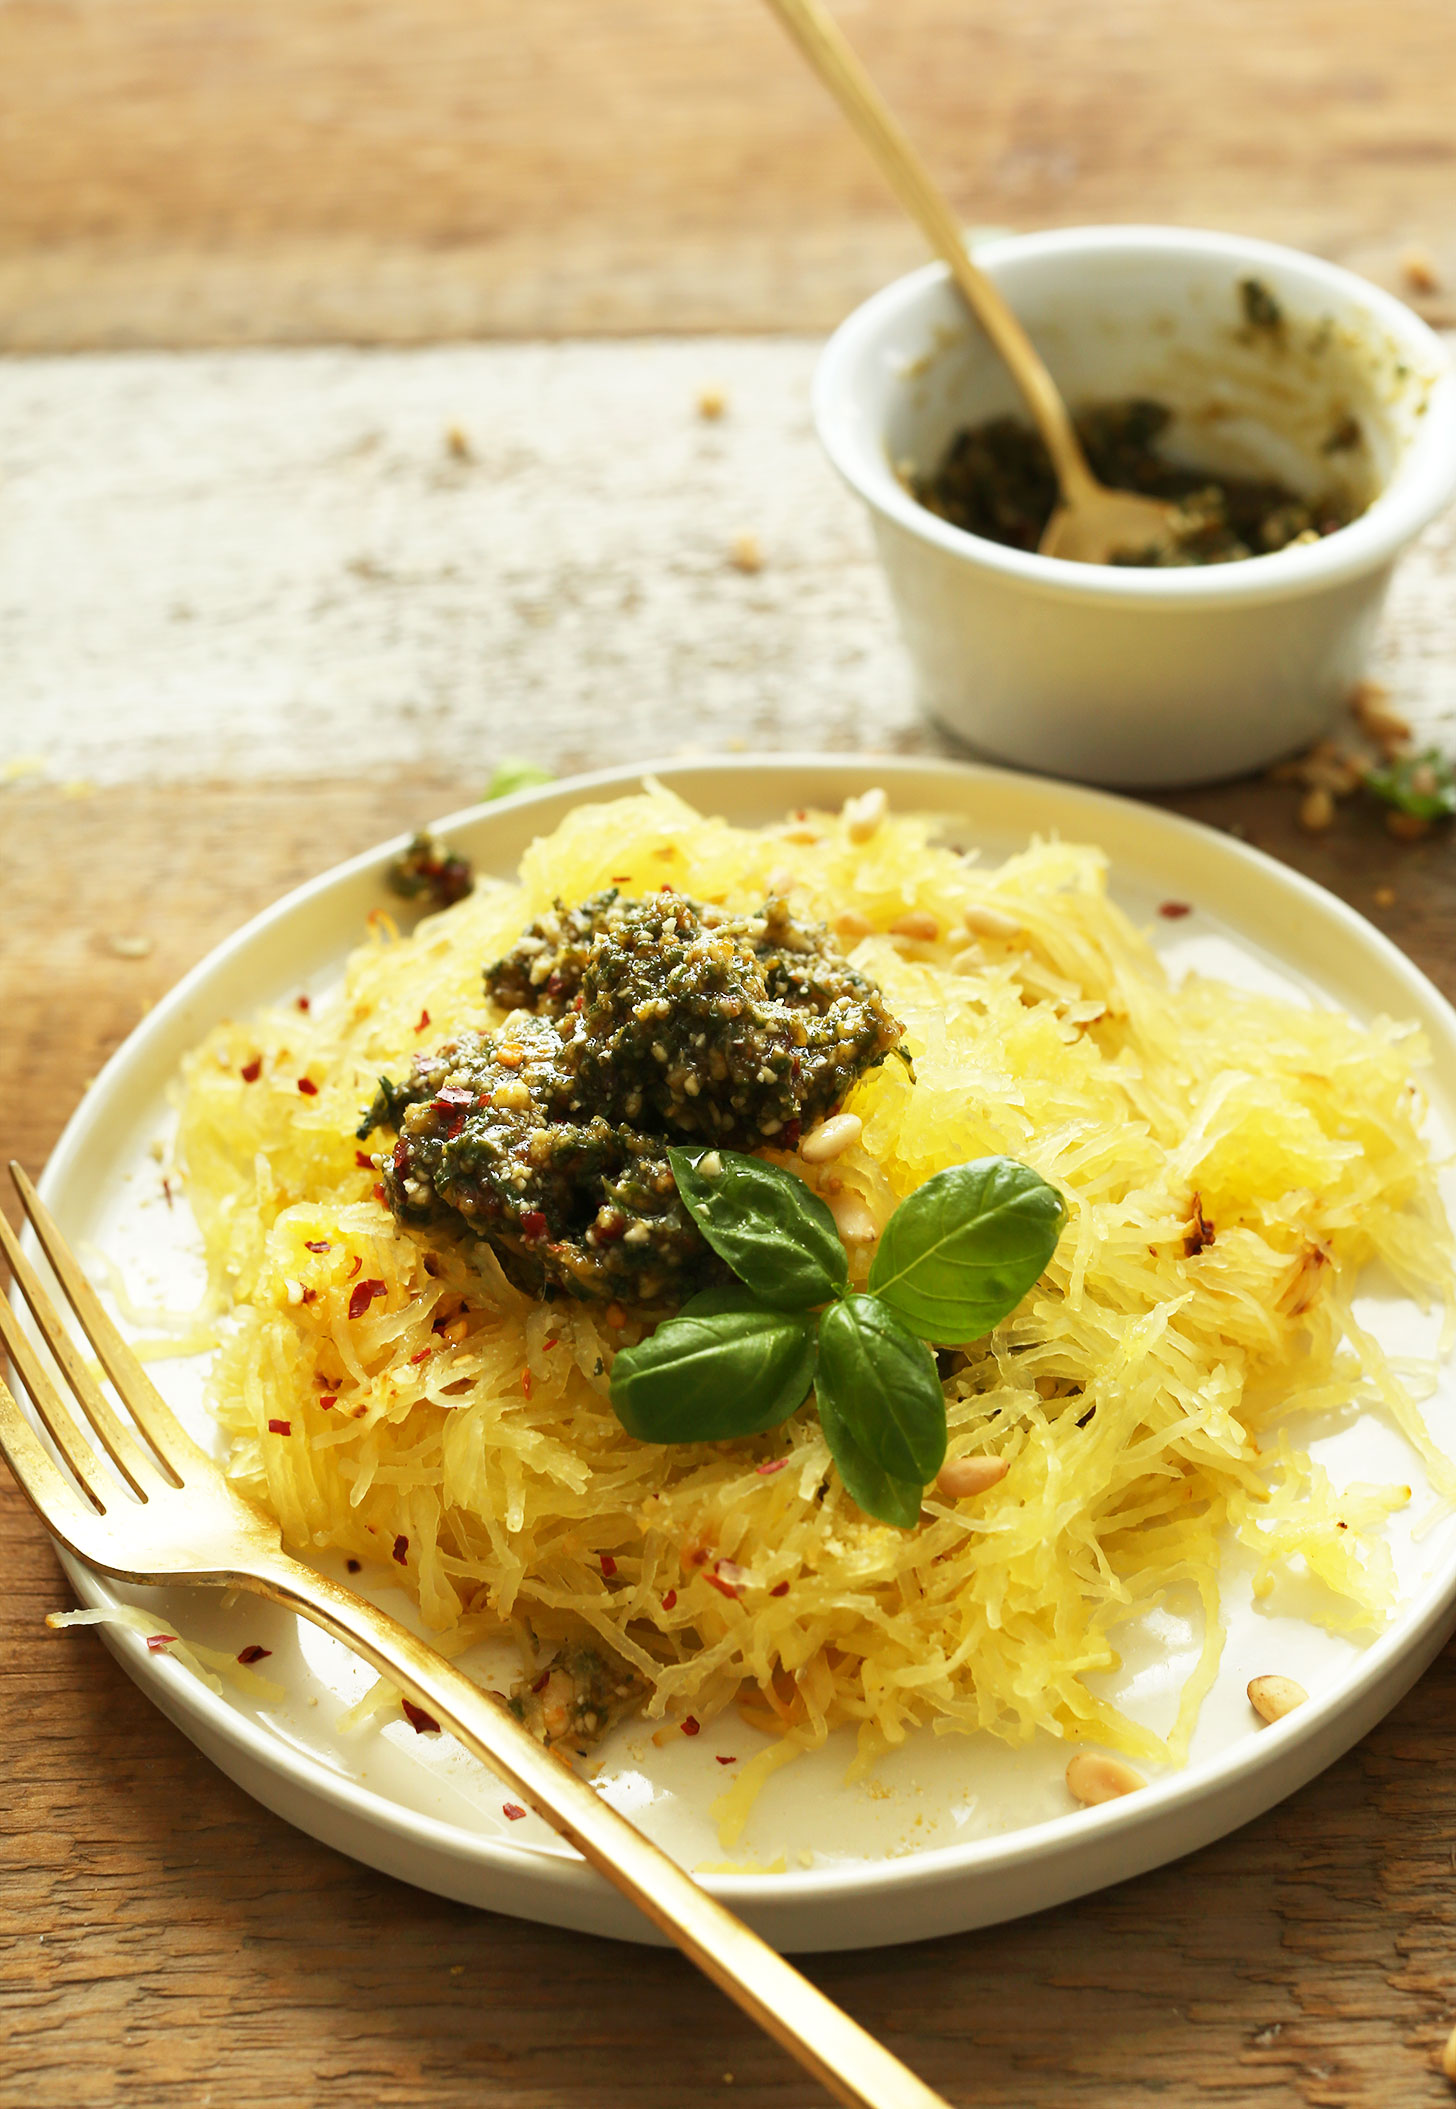 Plate of our delicious gluten-free vegan Spaghetti Squash Pasta recipe topped with pesto